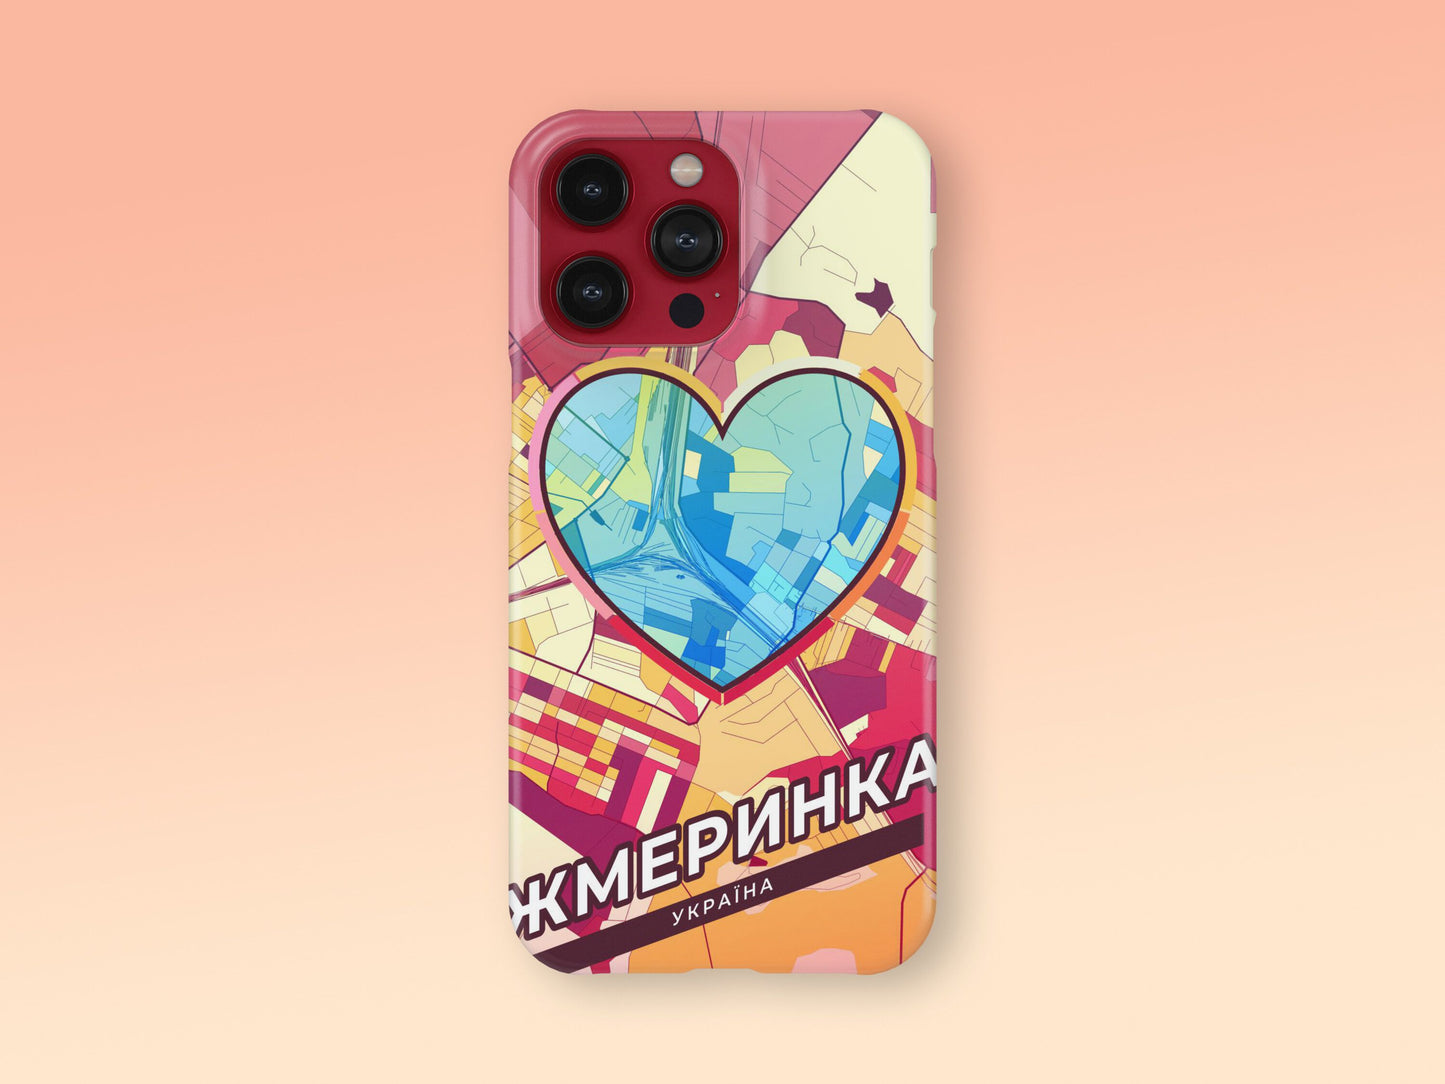 Zhmerynka Ukraine slim phone case with colorful icon 2